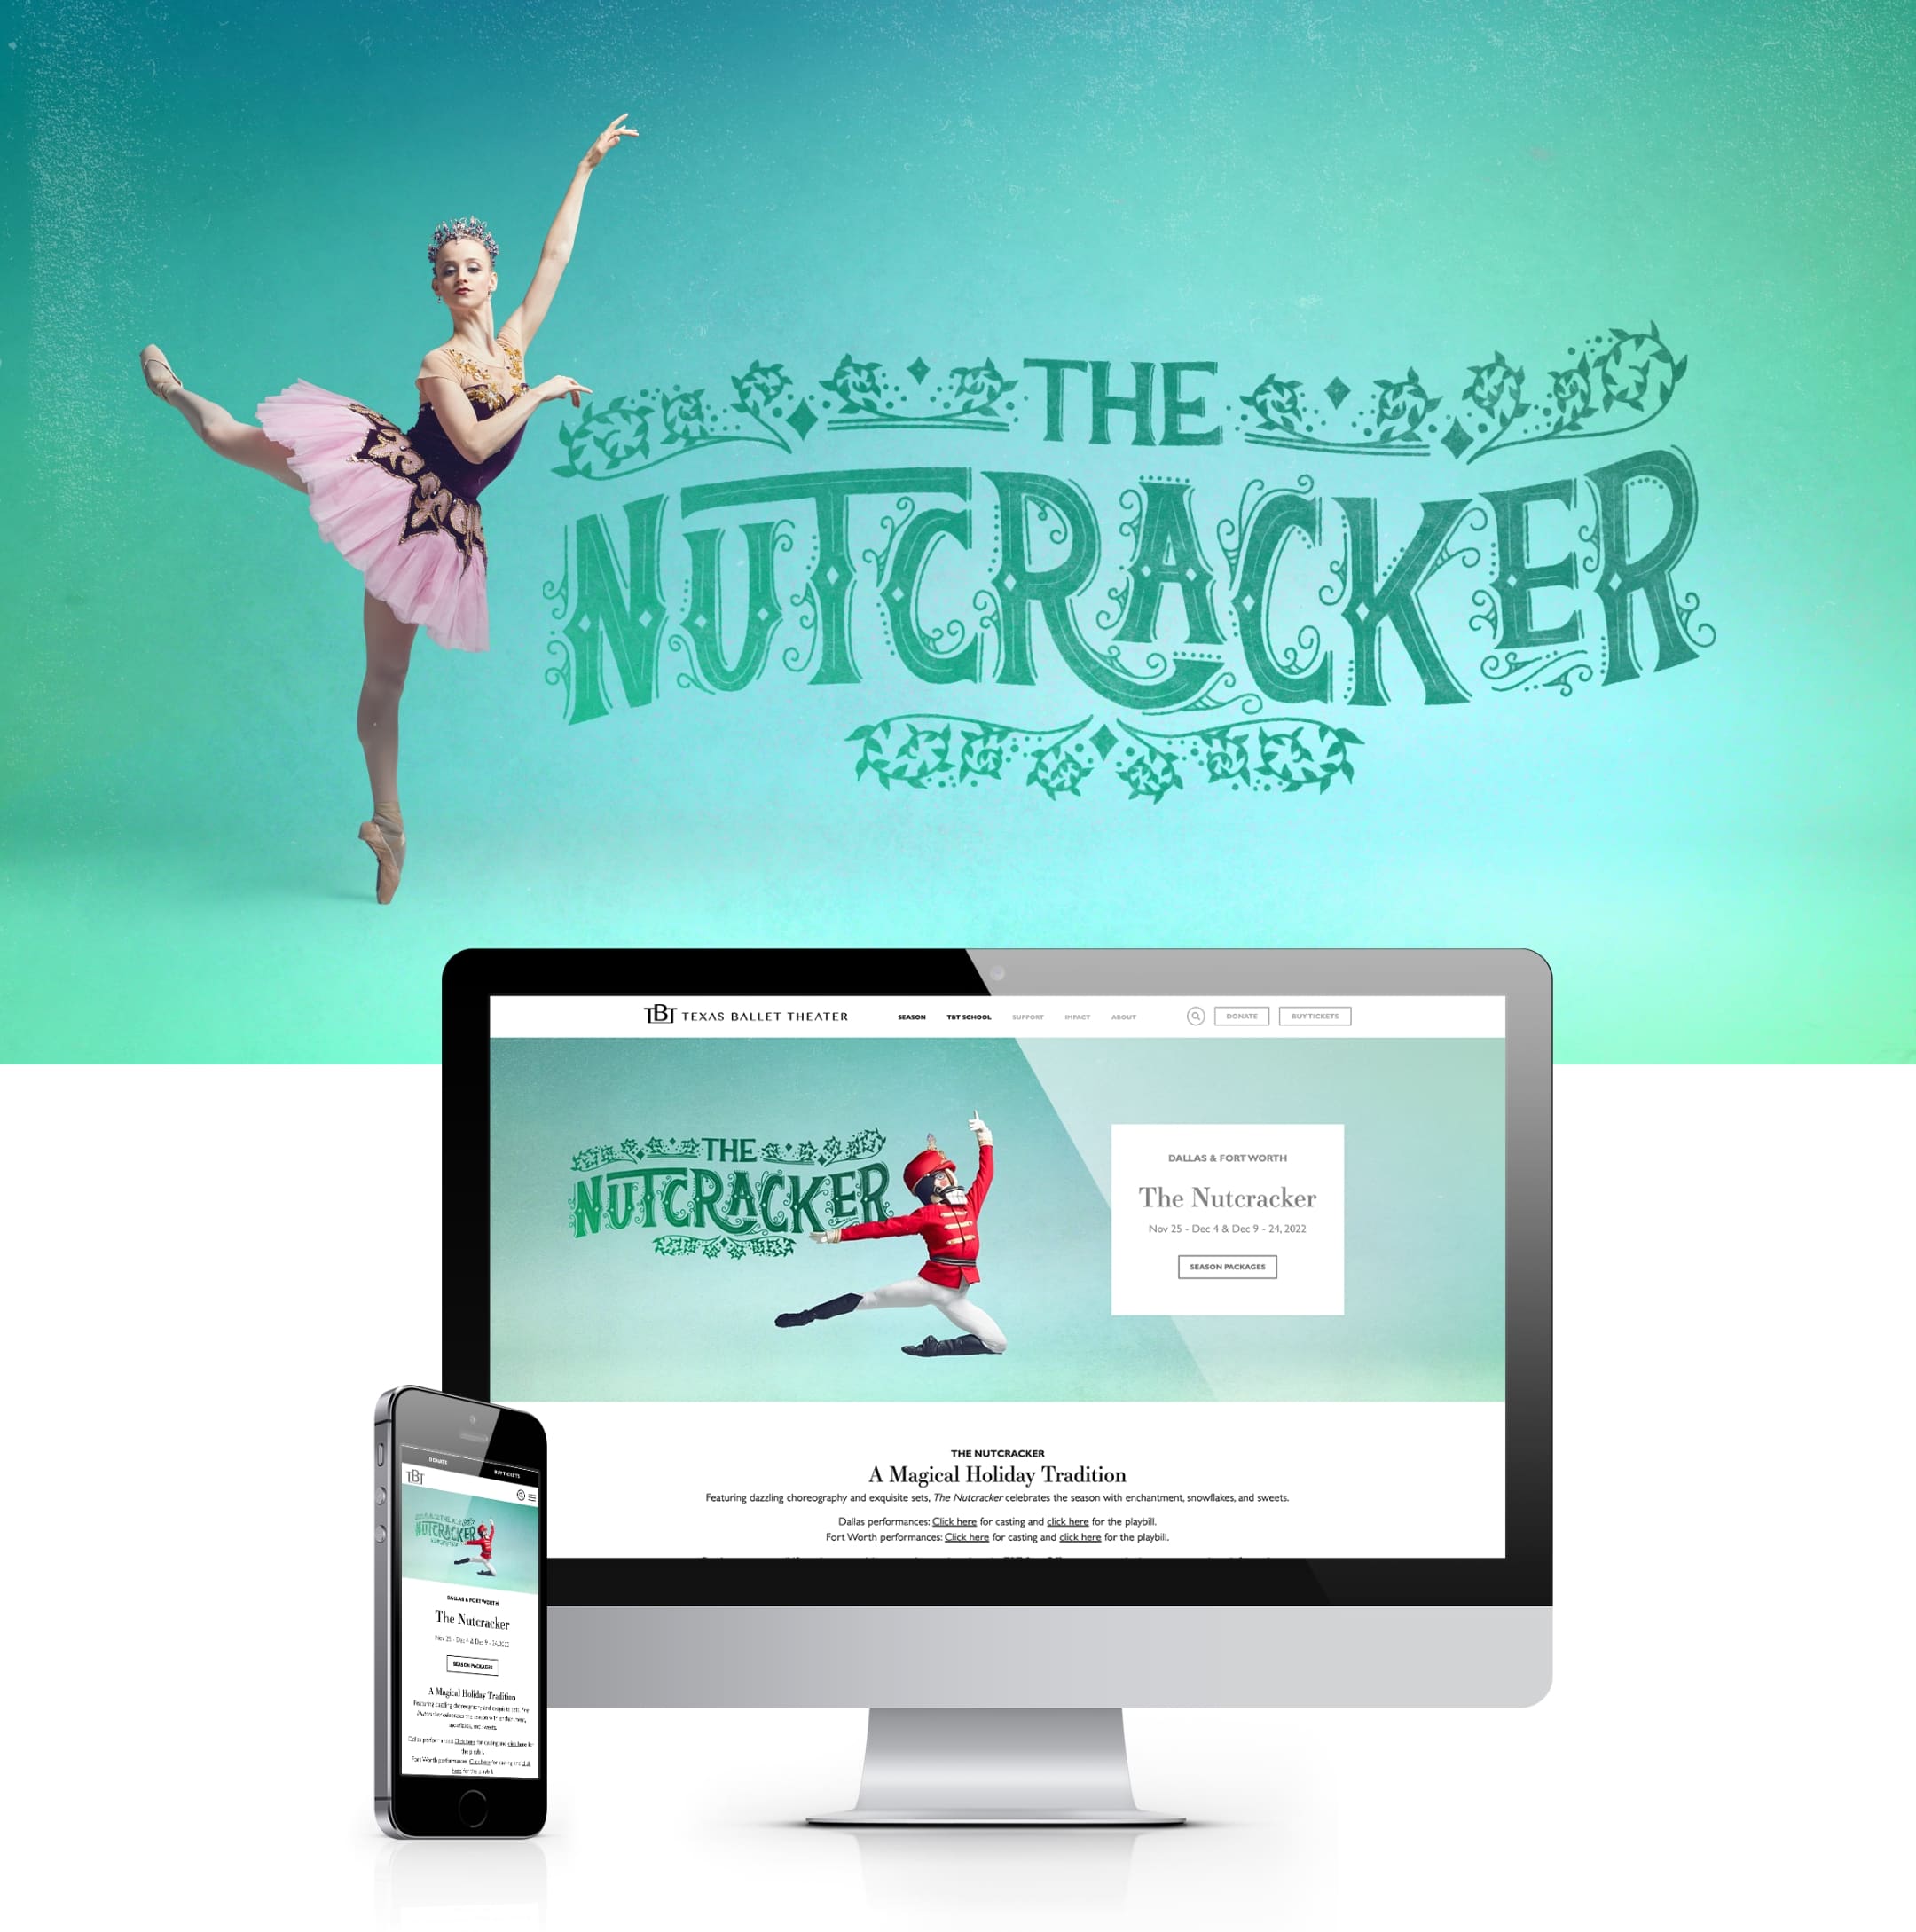 The Nutcracker Performance for Texas Ballet Theater